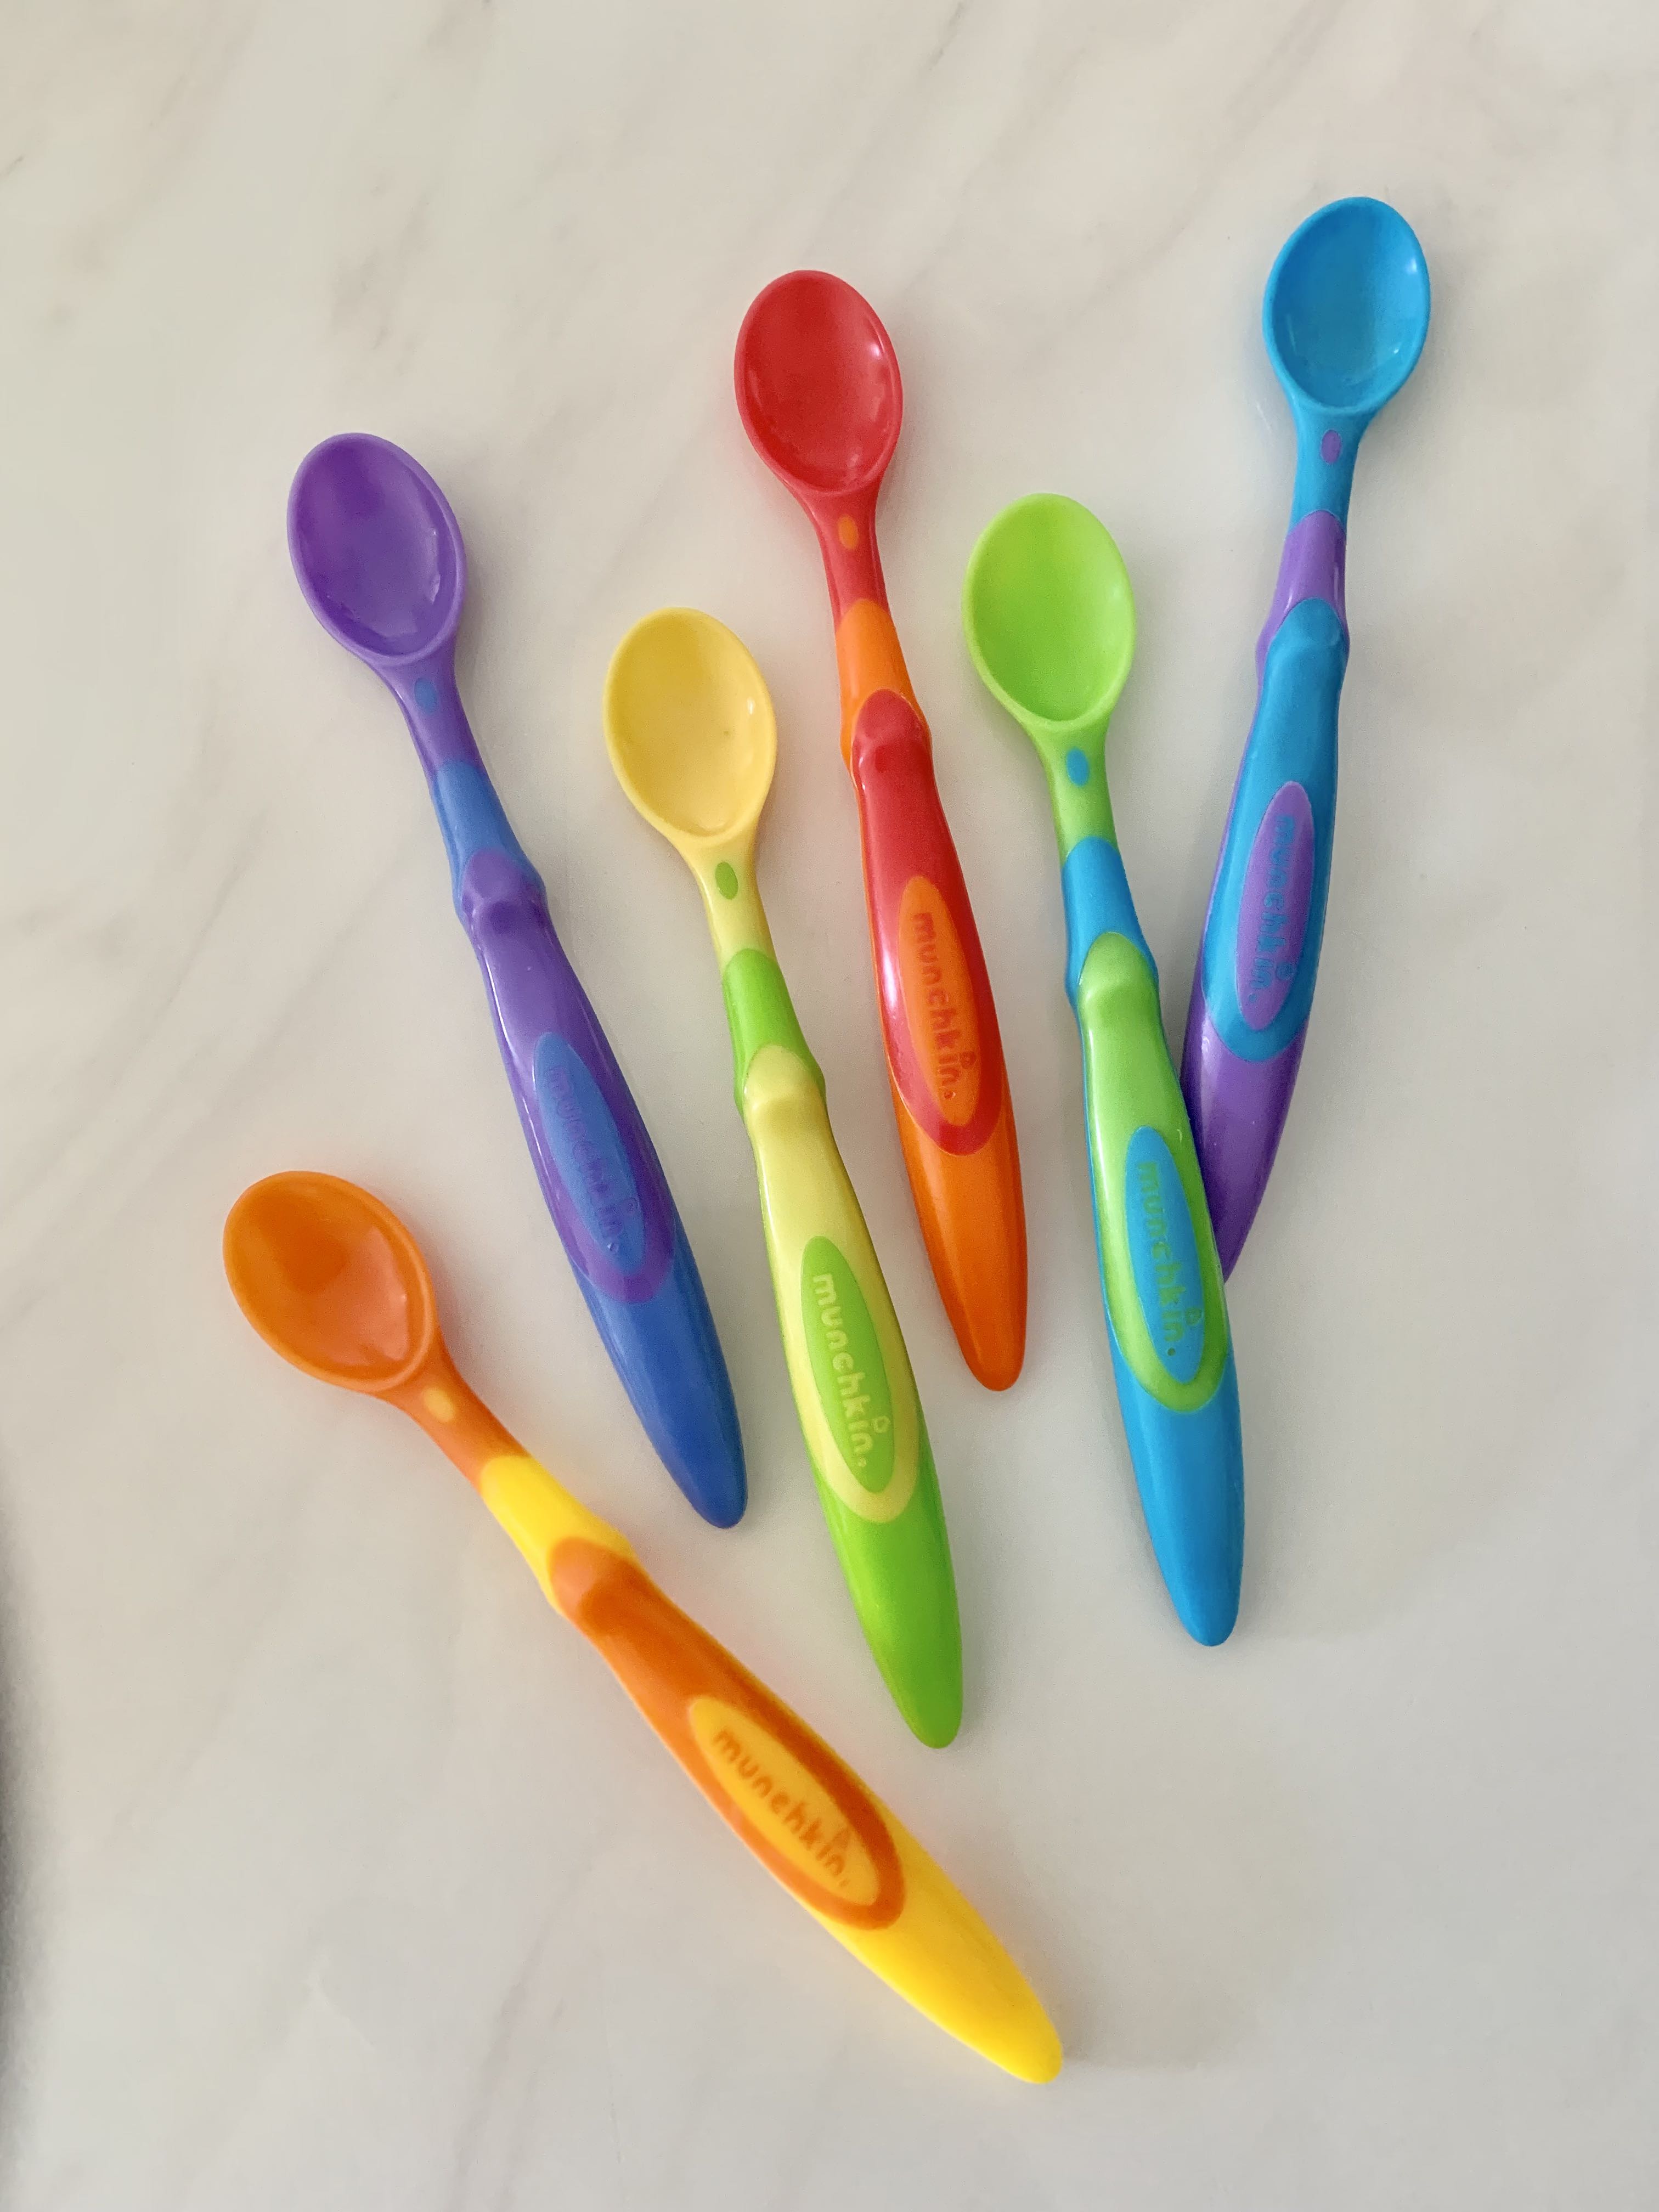 Munchkin Soft-tip infant spoons, Babies & Kids, Nursing & Feeding